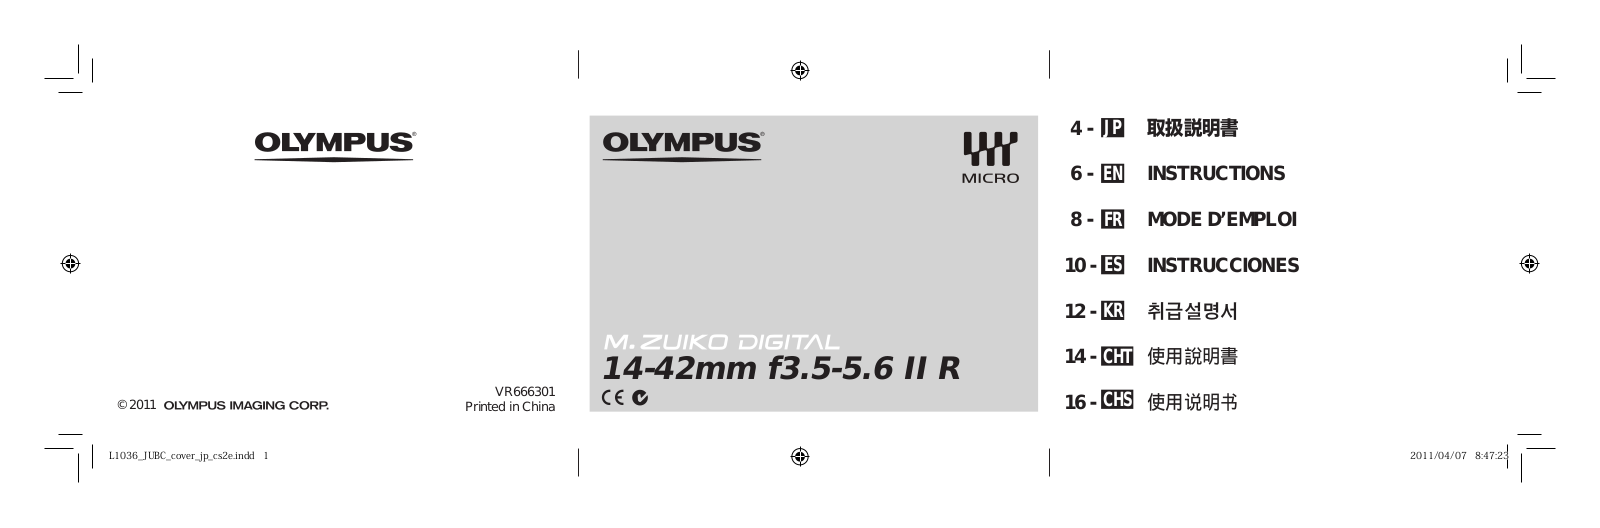 Olympus 14-42 II R User Manual